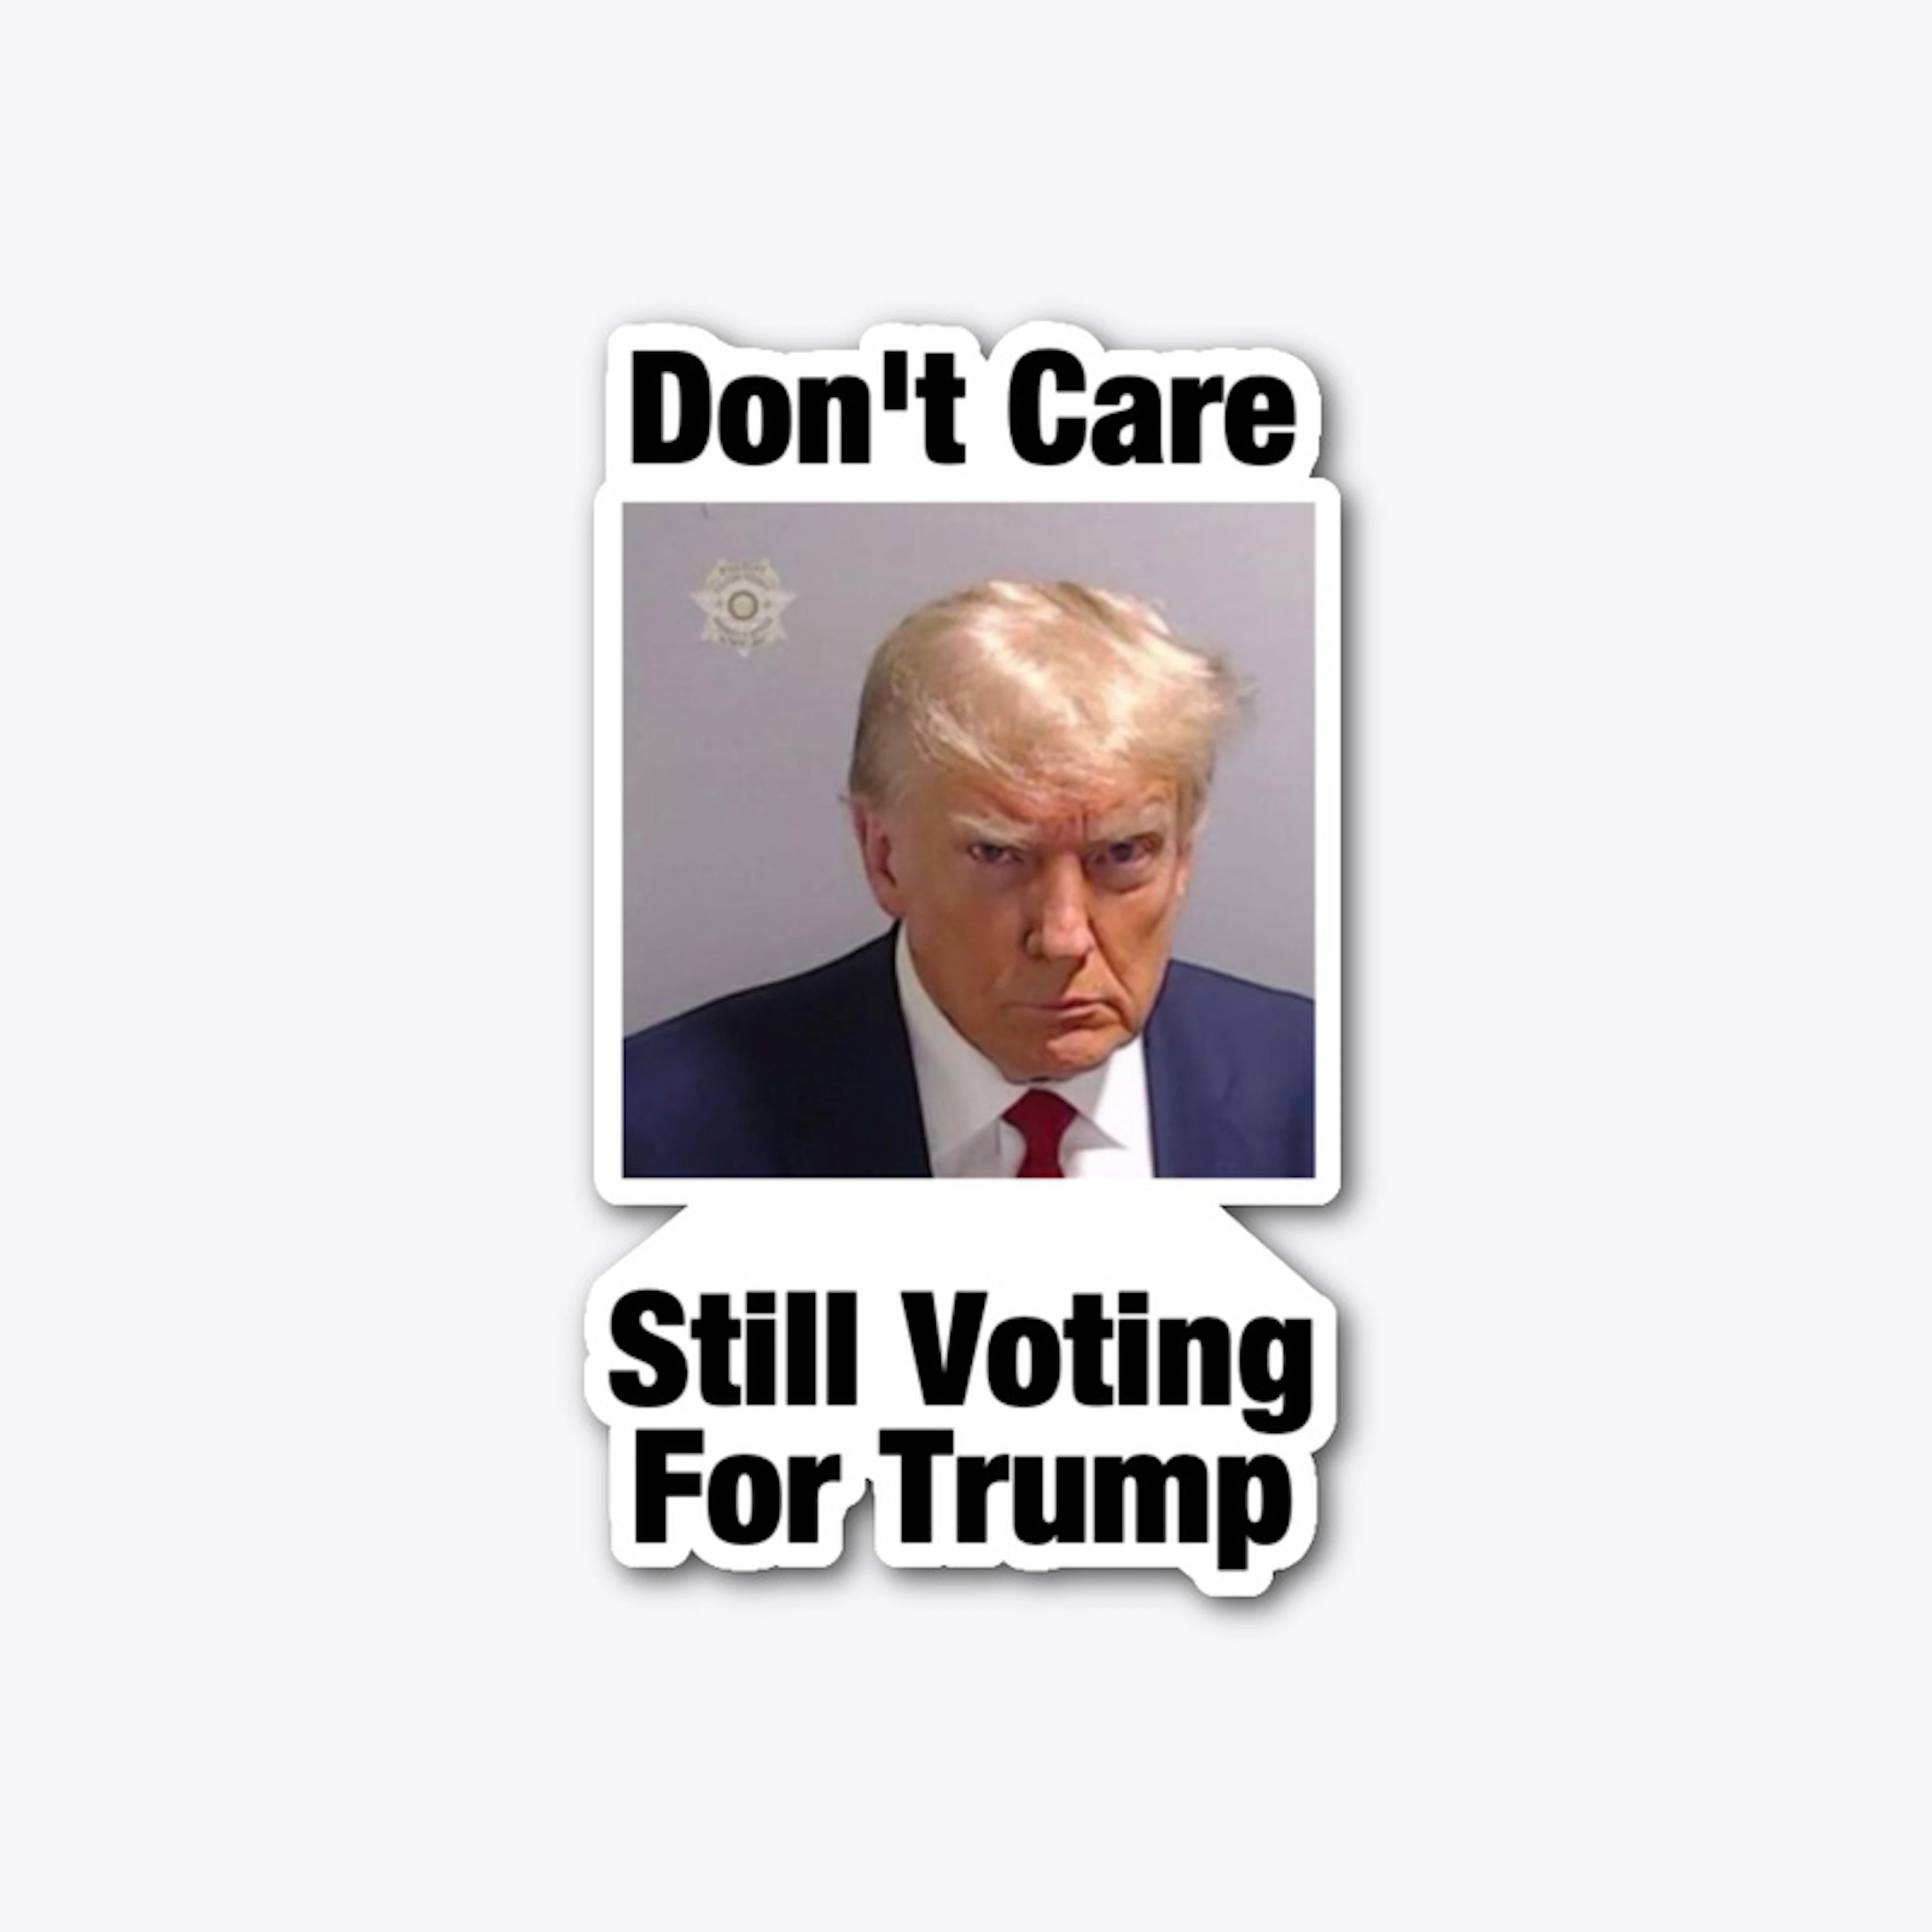 Don't Care, Still Voting For Trump